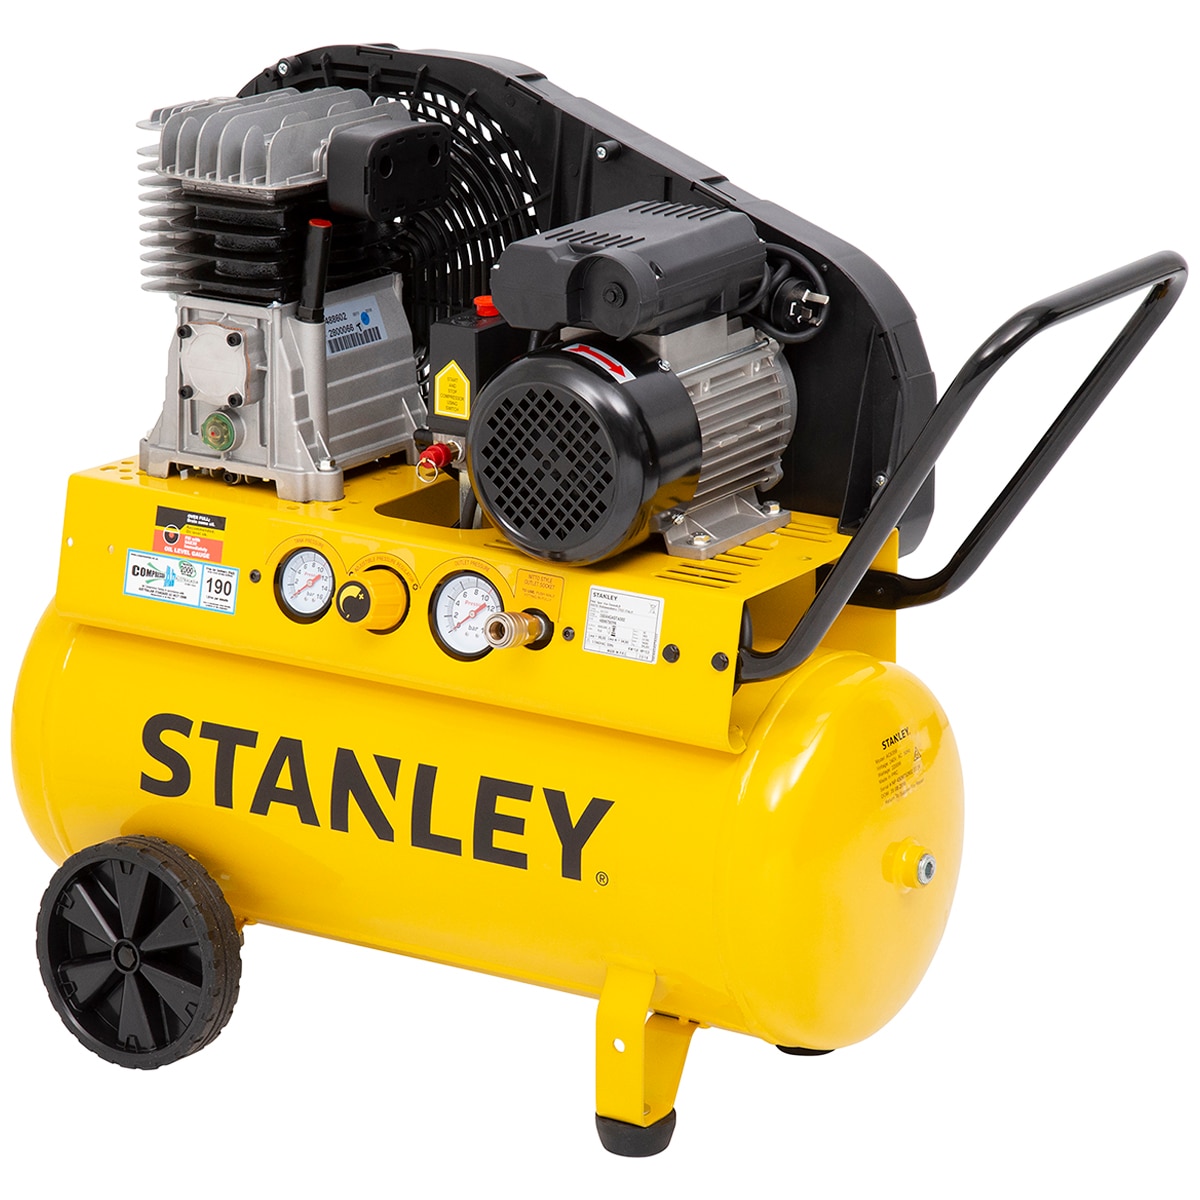 Stanley Air Compressor 2.5HP